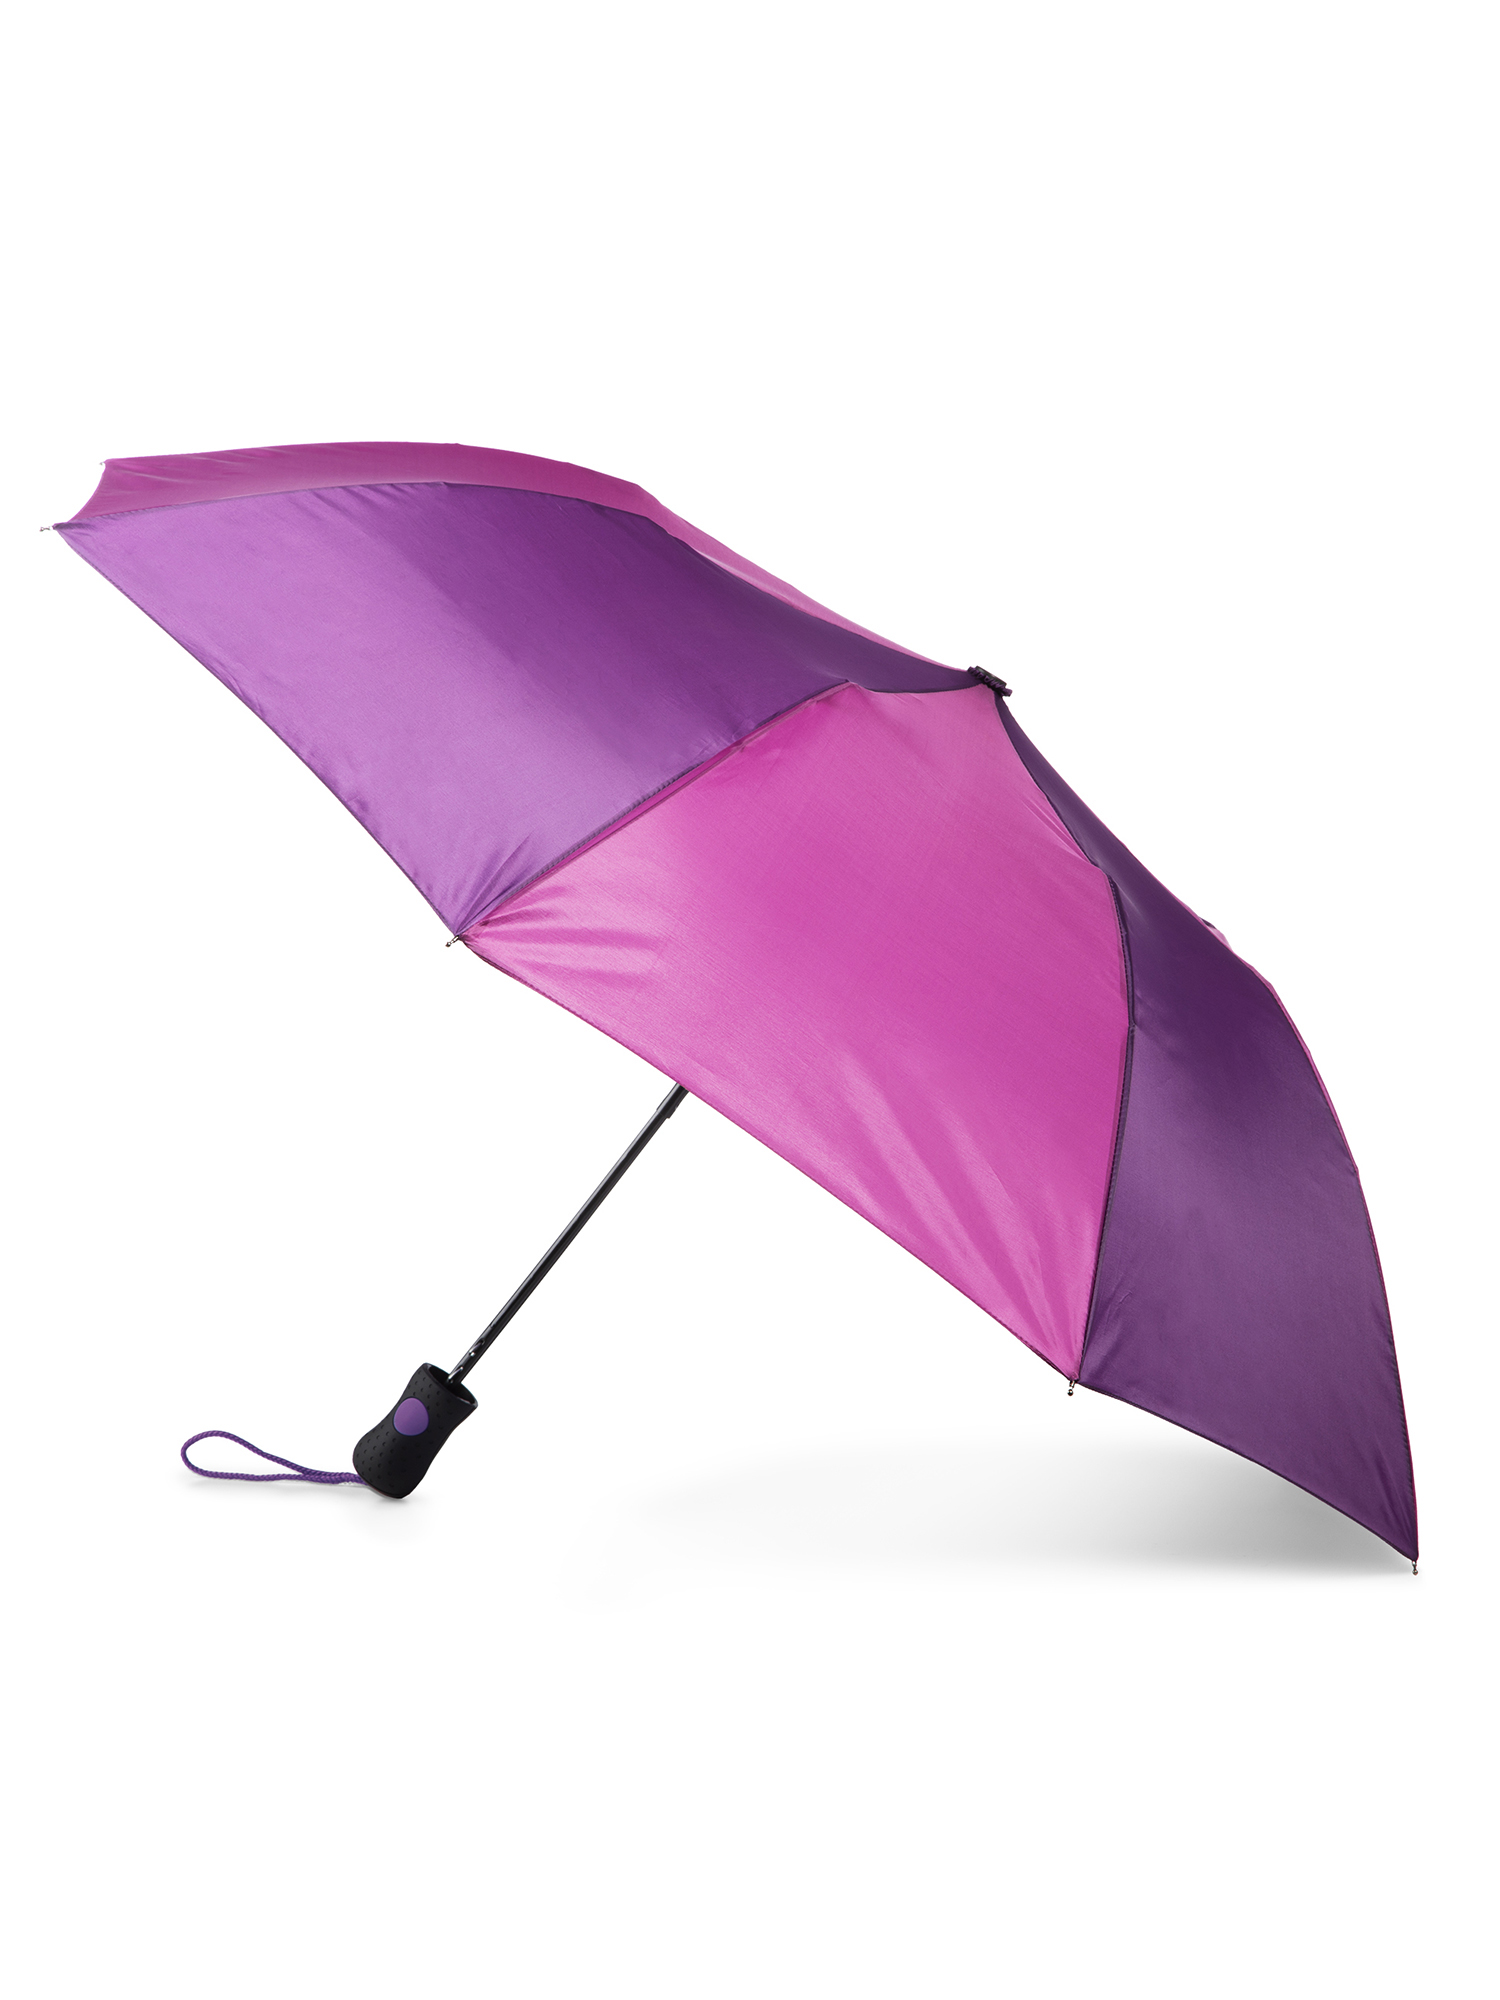 Totes Recycled Canopy Auto Open Rain Umbrella Purple Multi - image 1 of 3